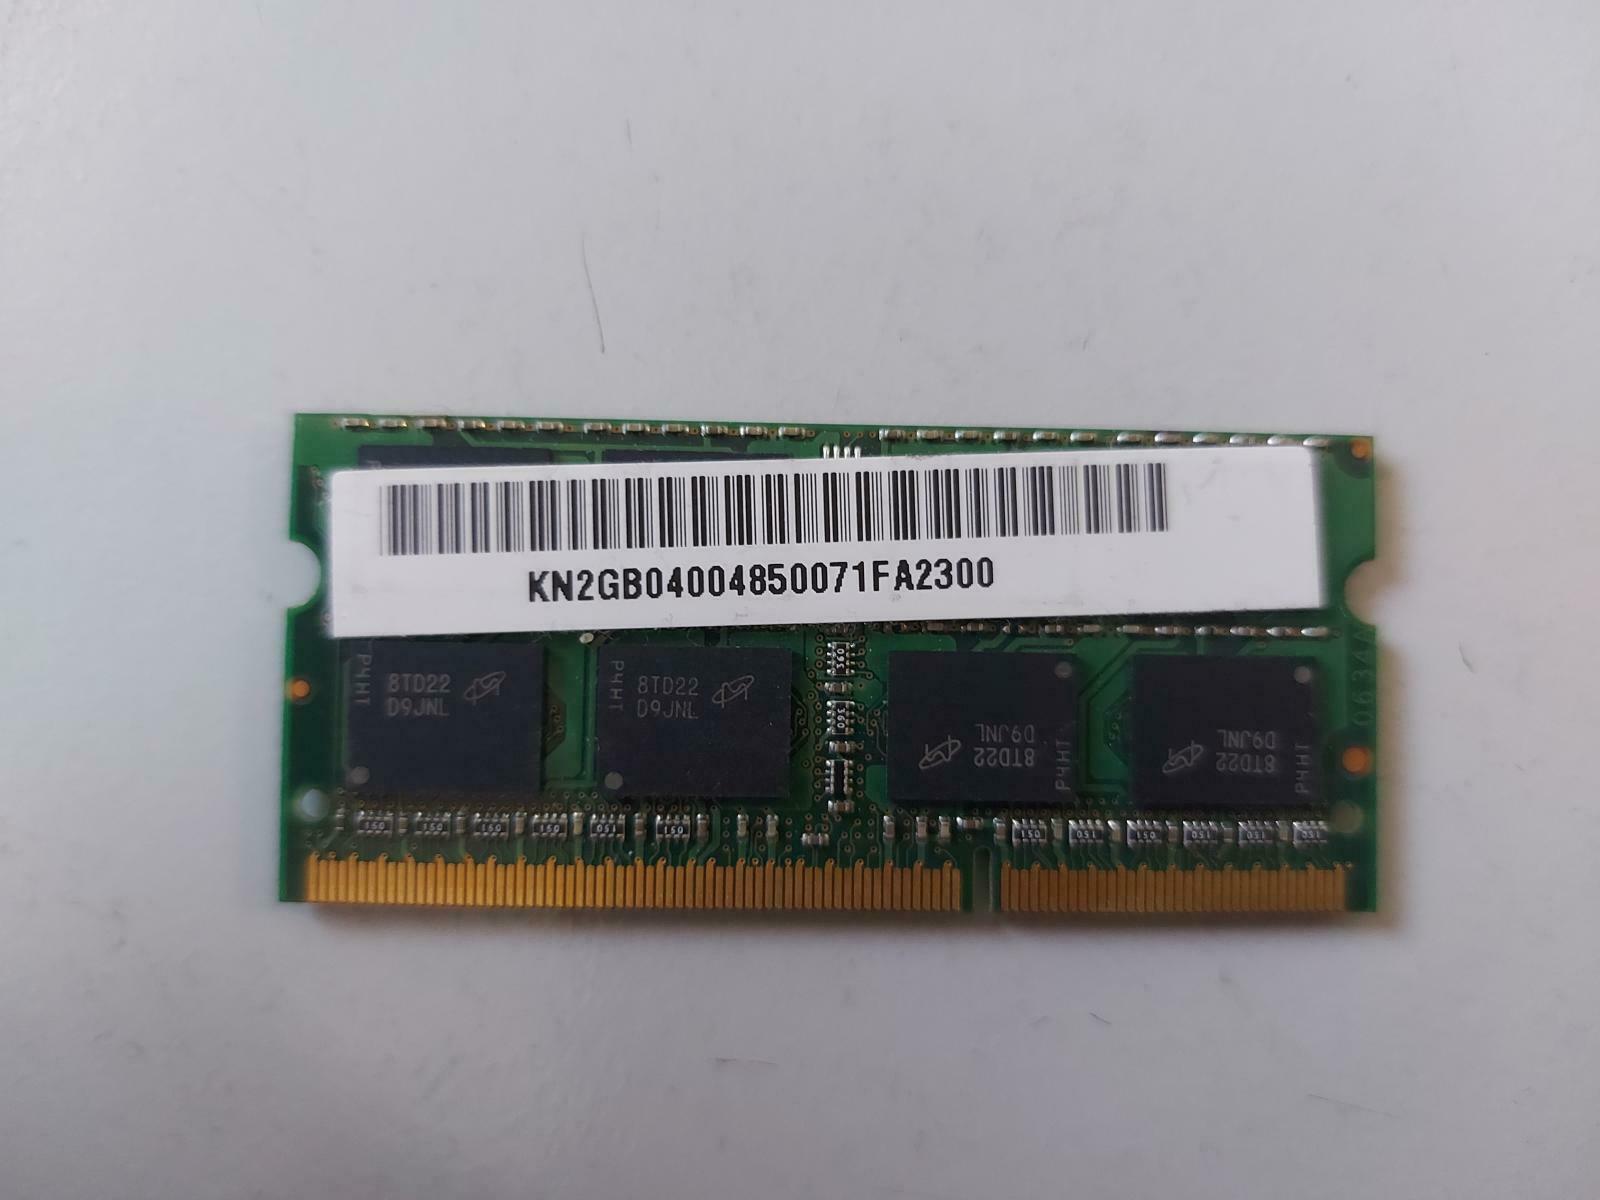 Micron 2GB DDR3-1066 SODIMM PC3-8500 NON-ECC Memory Module MT16JSF25664HY-1G1D1